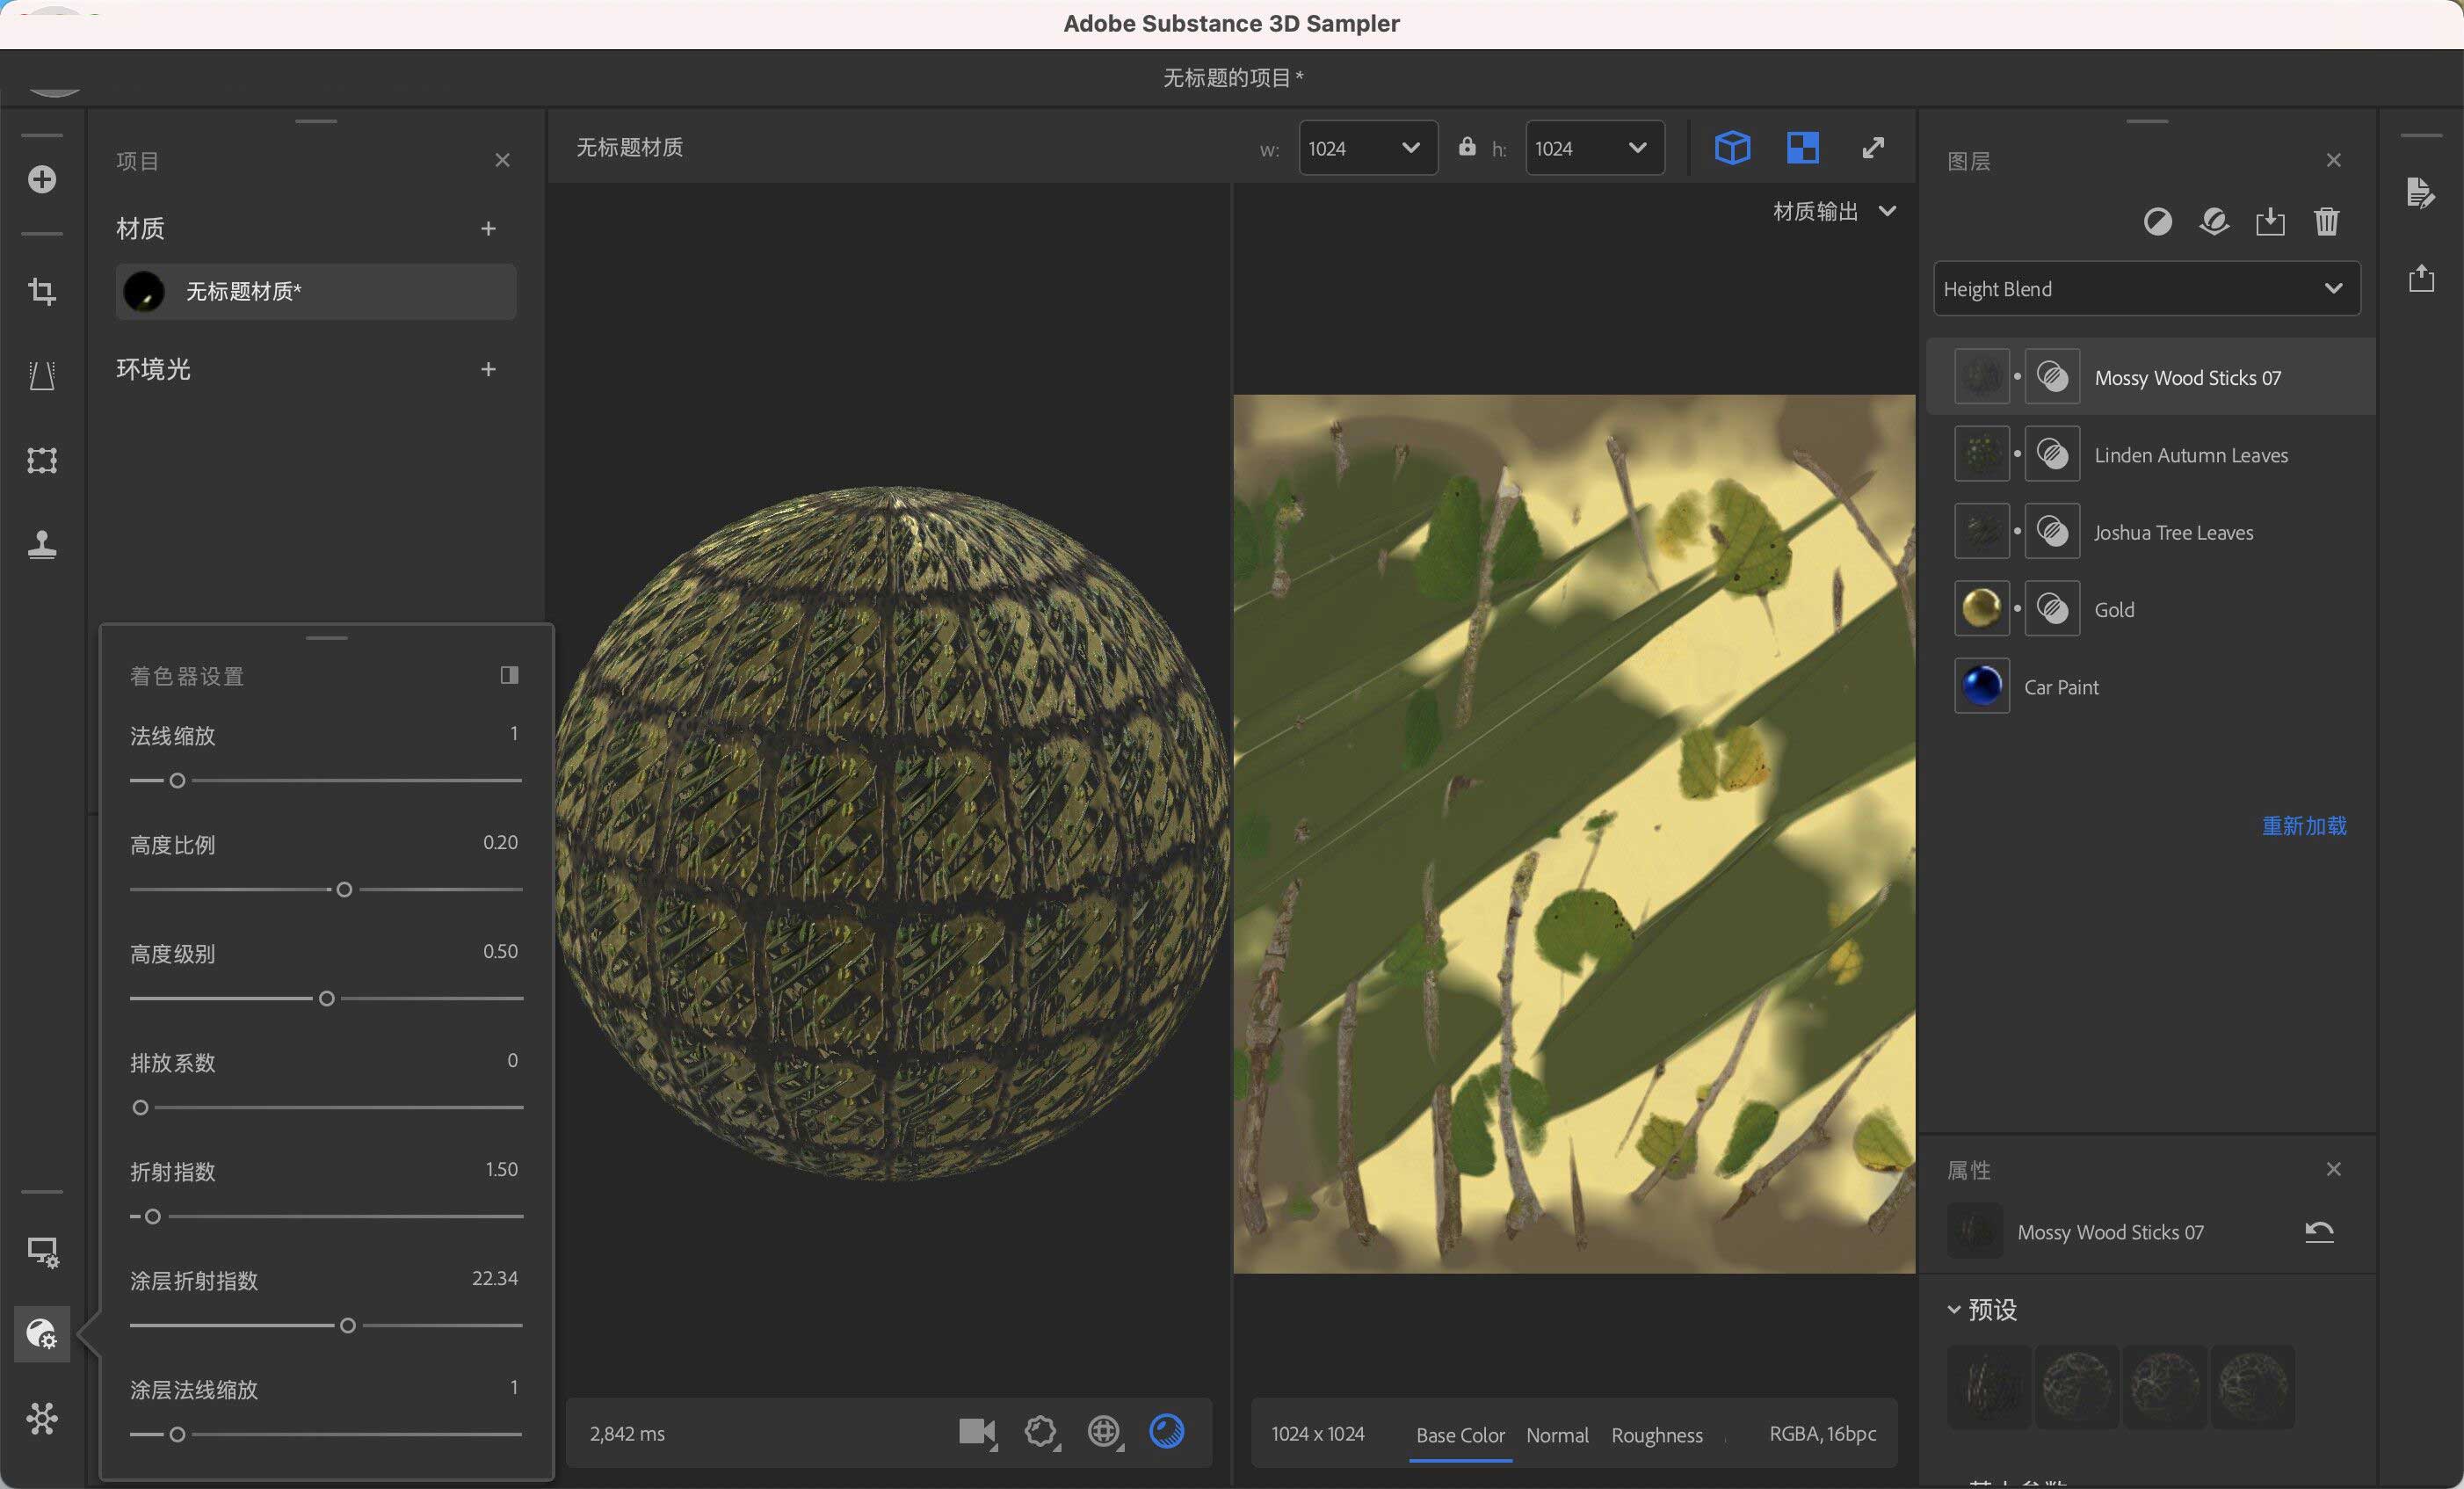 Adobe Substance 3D Sampler 4.1.2.3298 for ios download free